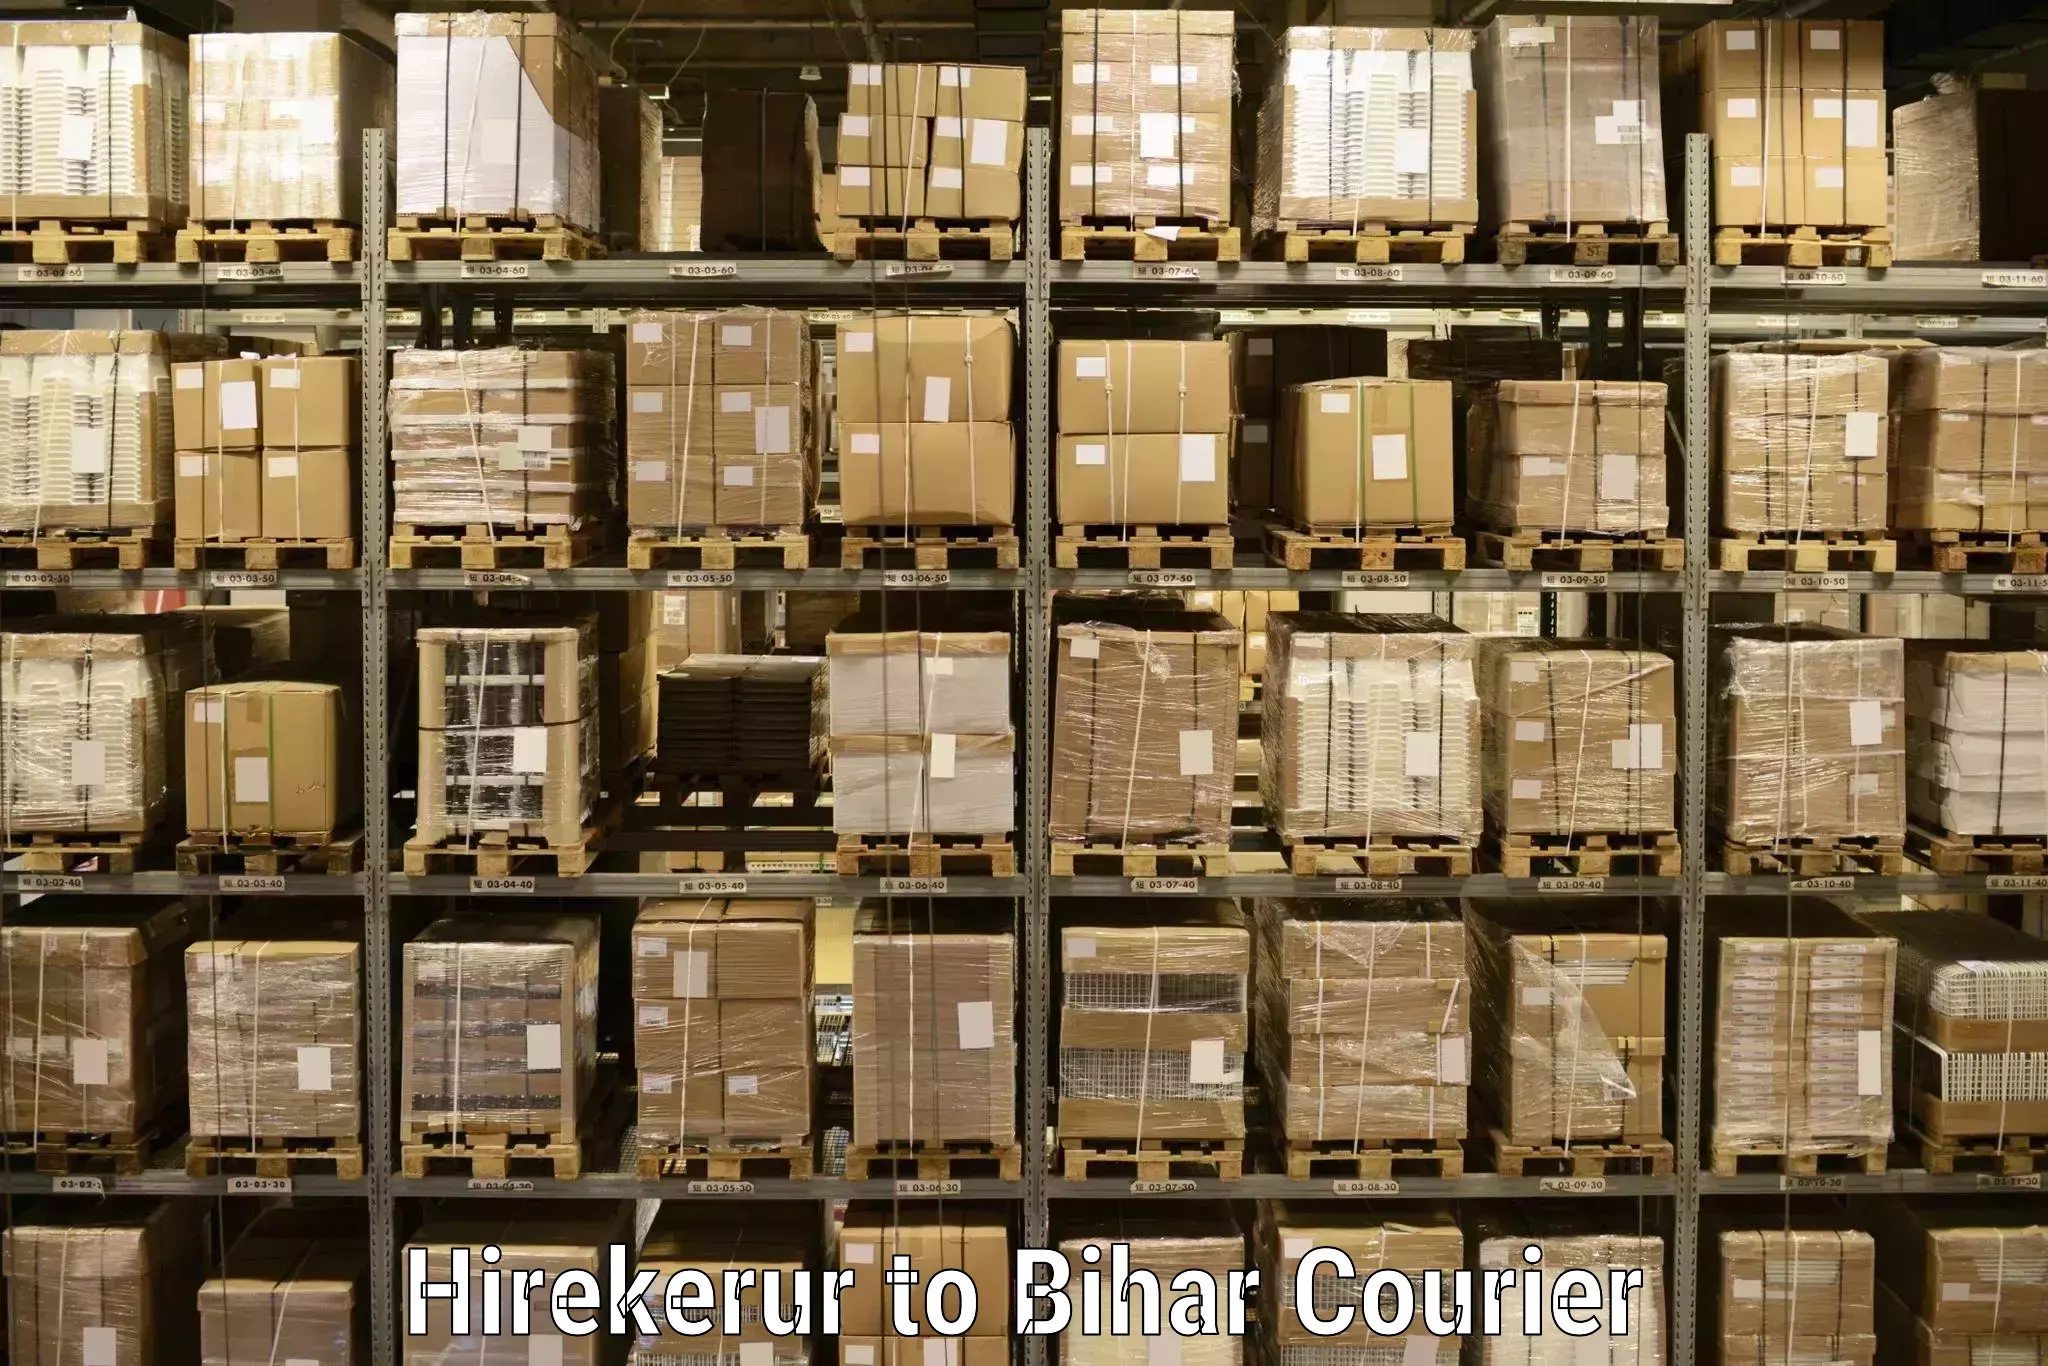 Multi-national courier services Hirekerur to Aurangabad Bihar